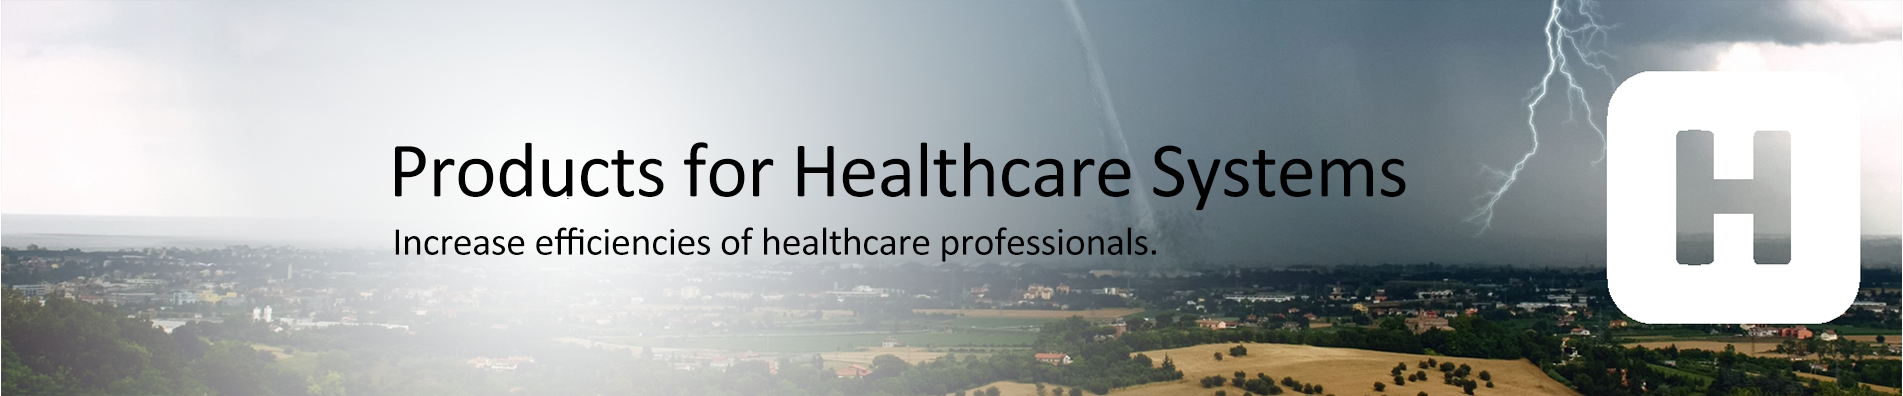 EP Healthcare header